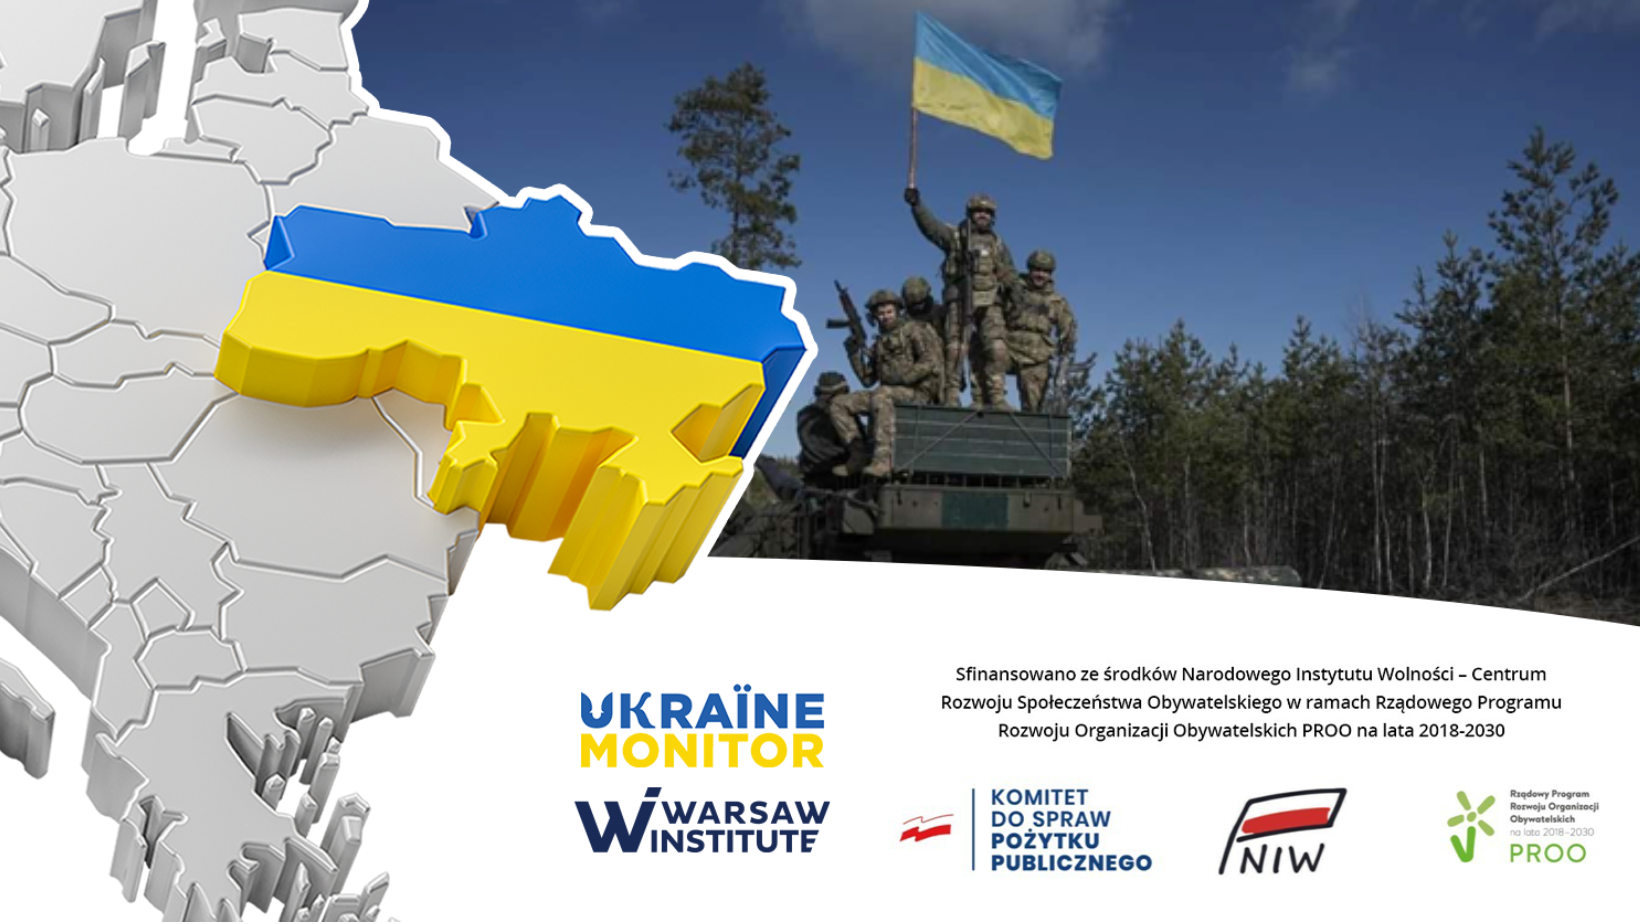 Ukraine Claims It Has Seized Strategic Initiative